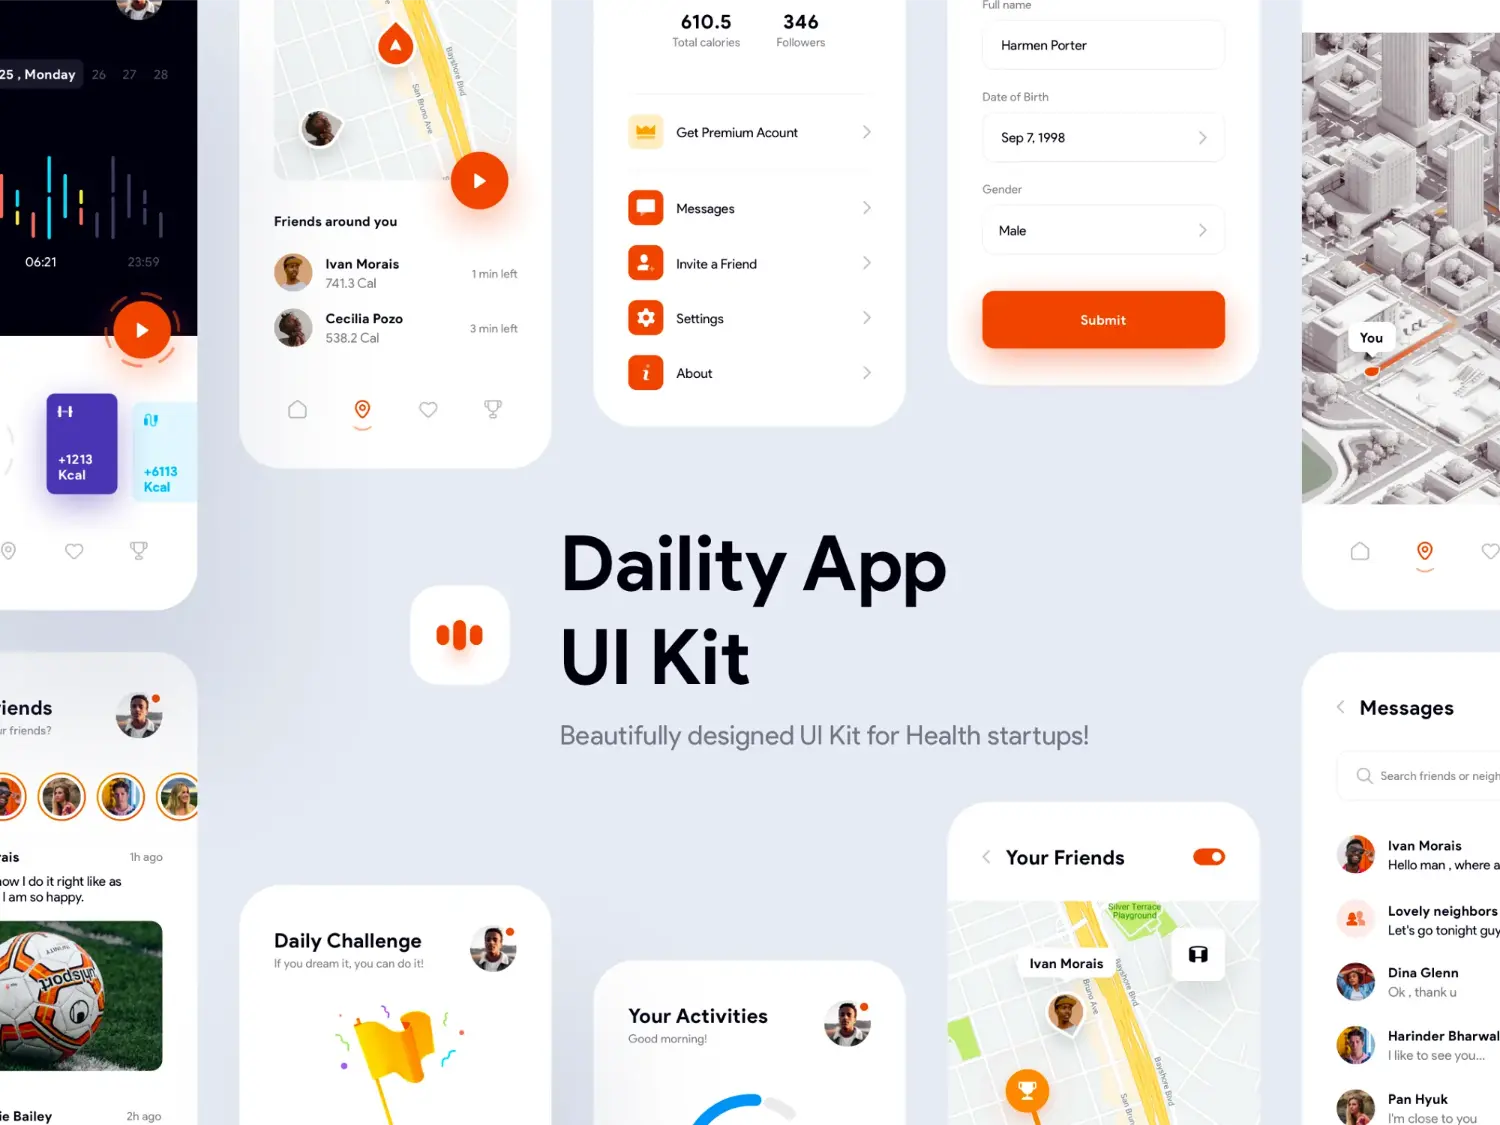 [VIP] Daility 1 App UI Kit - 20+ Screens